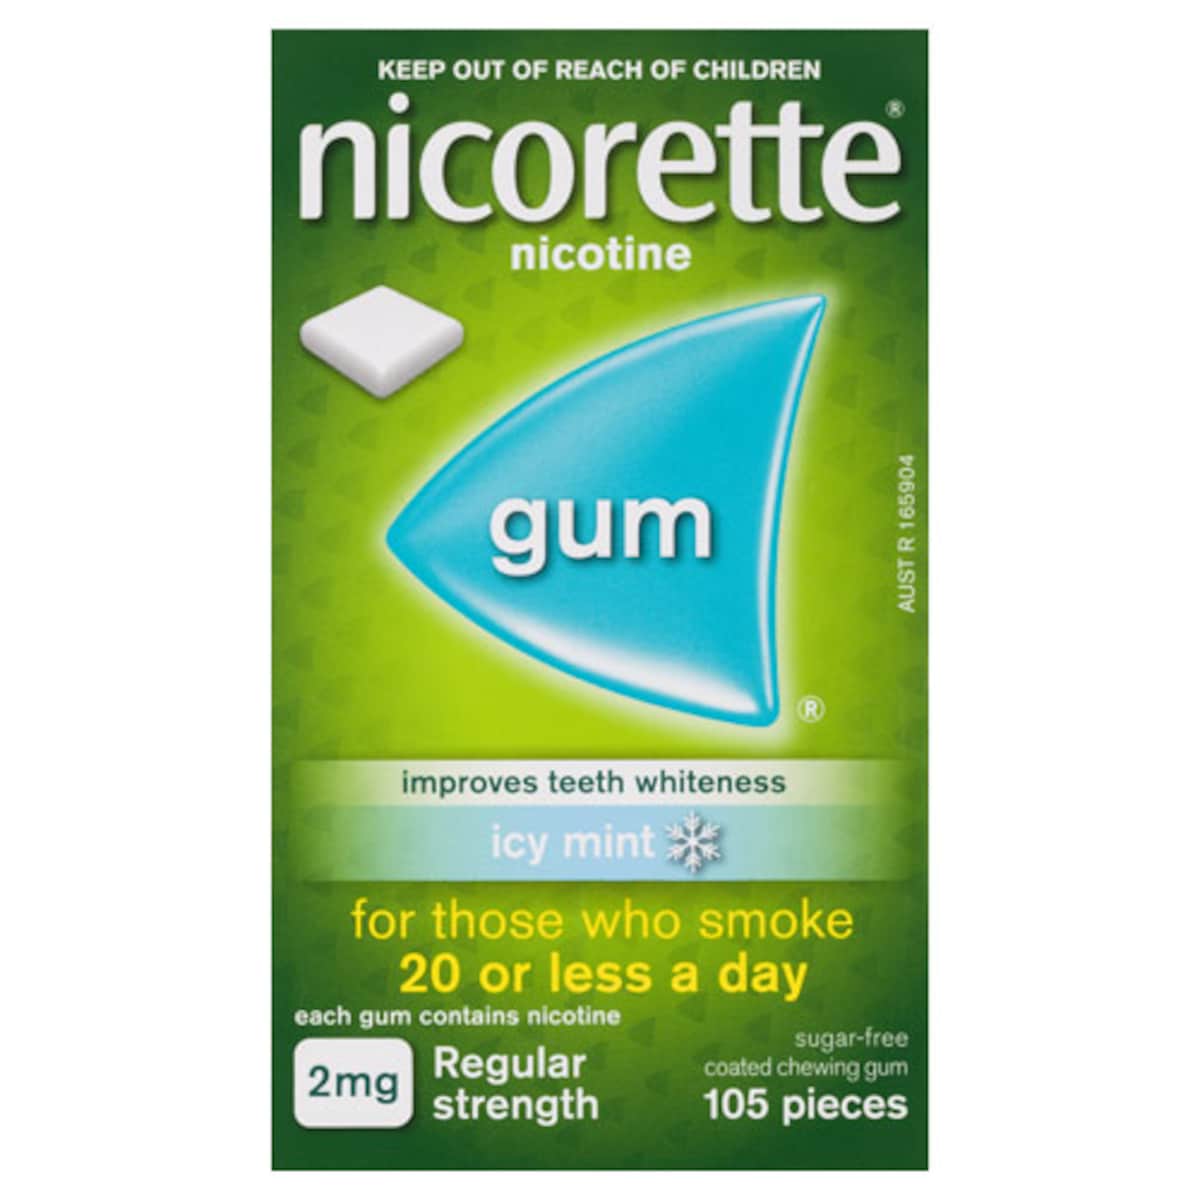 Nicorette Quit Smoking Nicotine Gum 2mg Icy Mint 105 Pieces